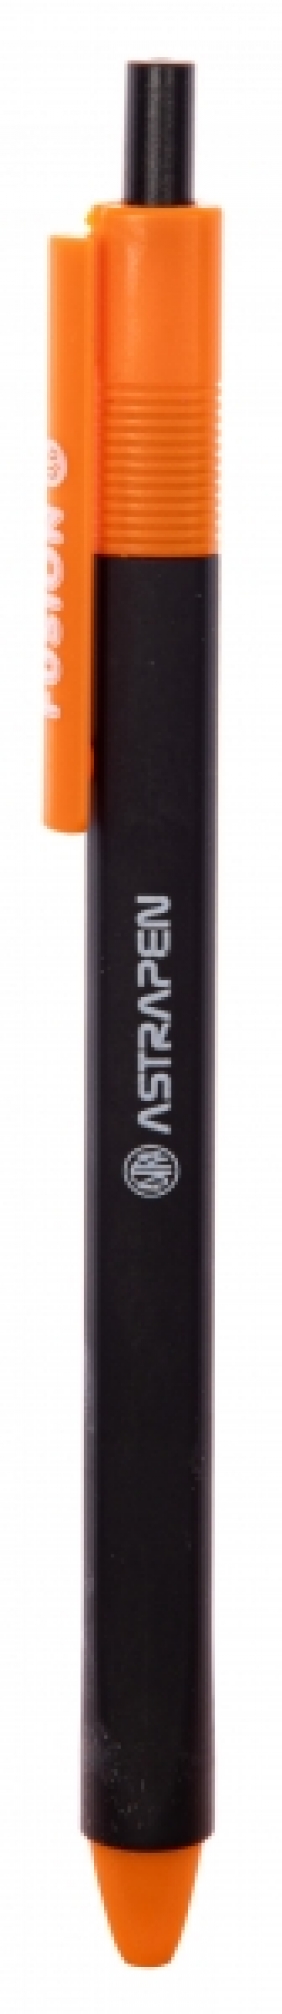 Długopis automatyczny trójkątny Fusion 0.6 mm Astra Pen, blister 1 szt.